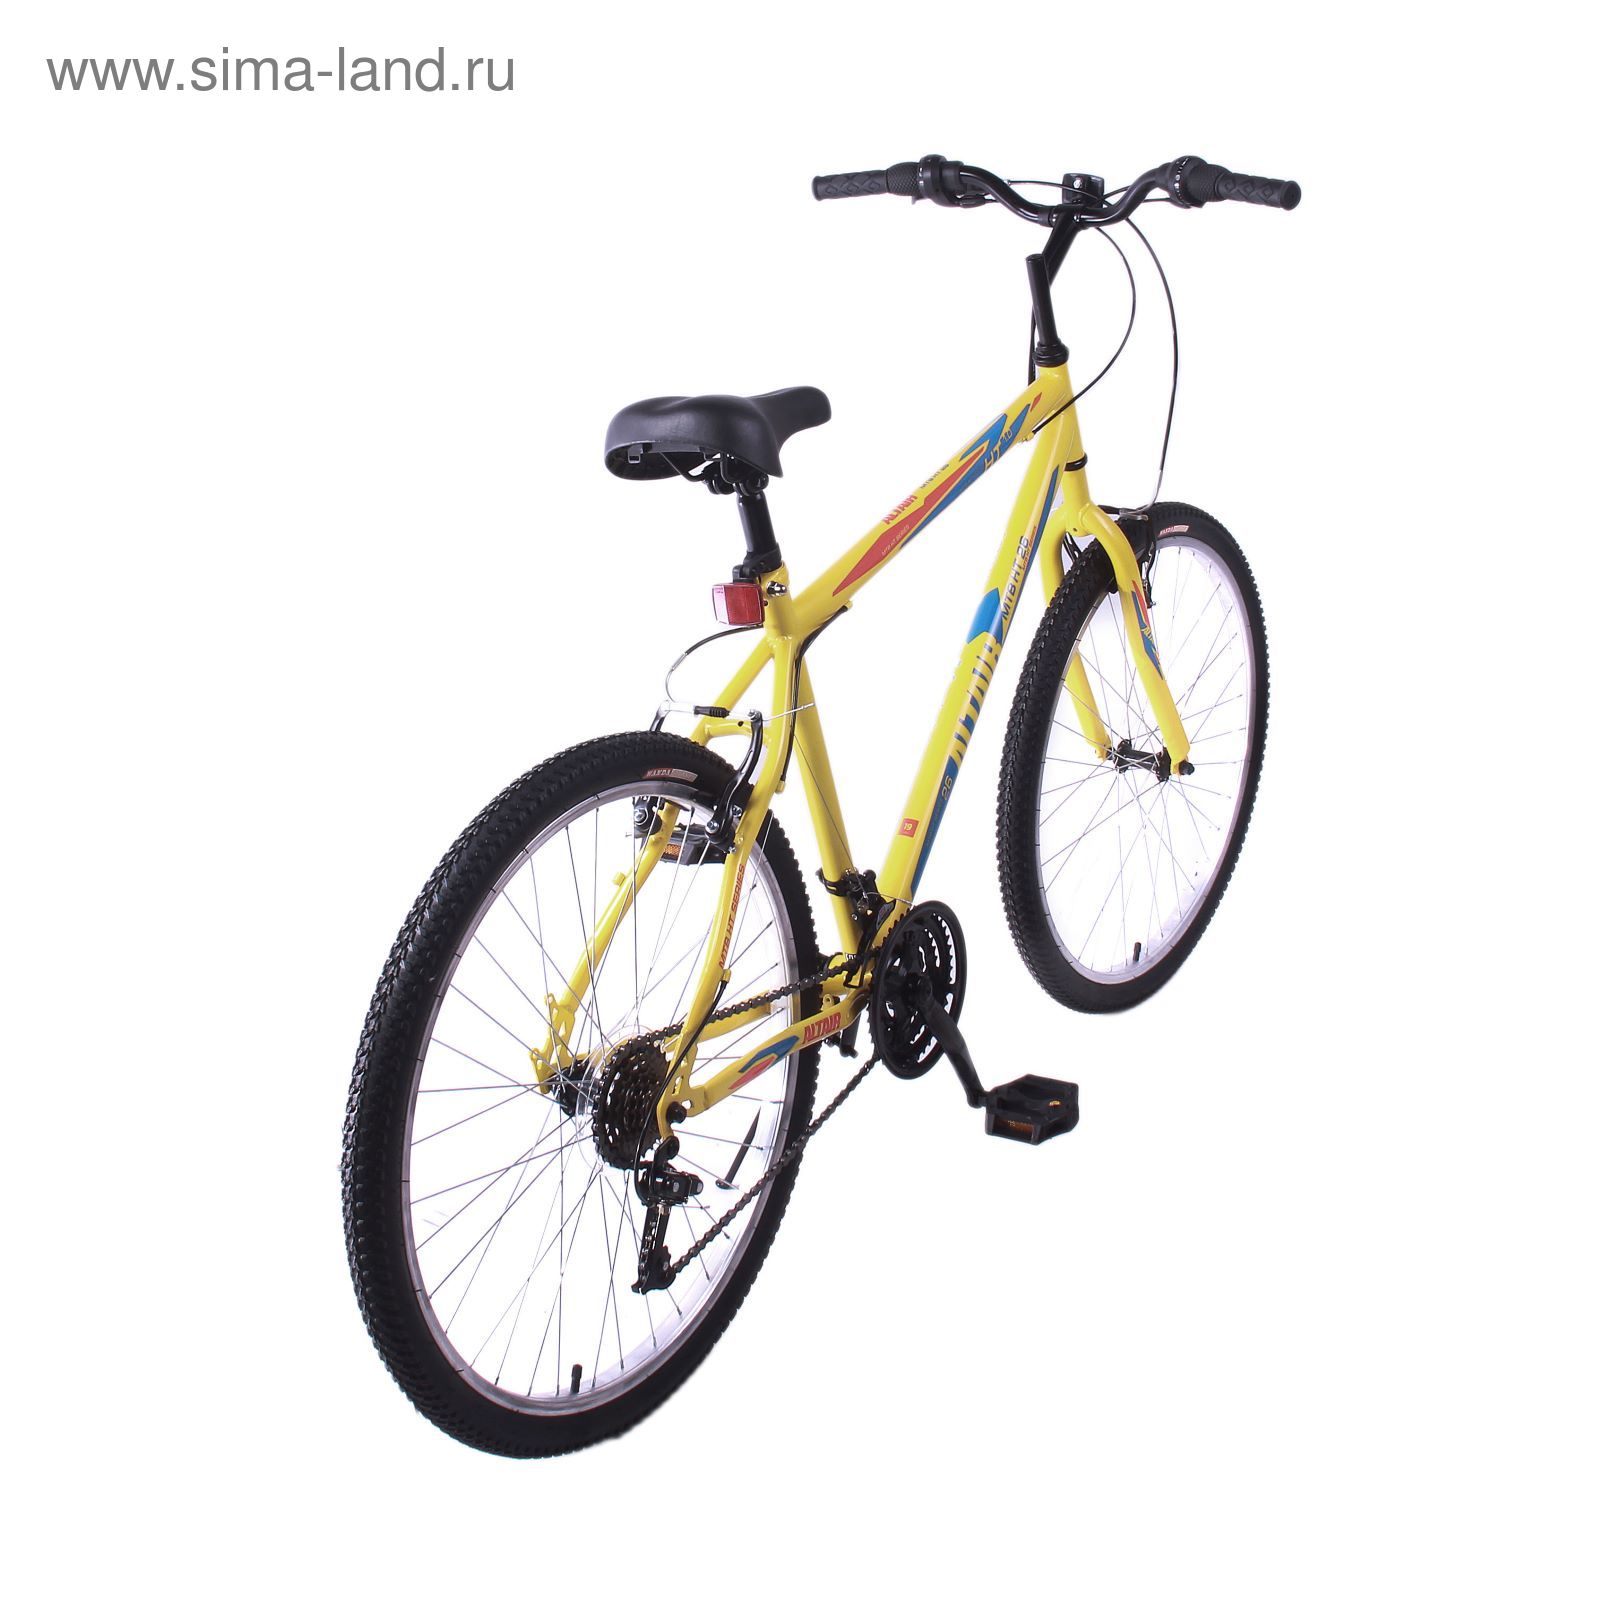 Велосипед 26" Altair MTB HT 1.0, 2017, цвет желтый, размер 19"